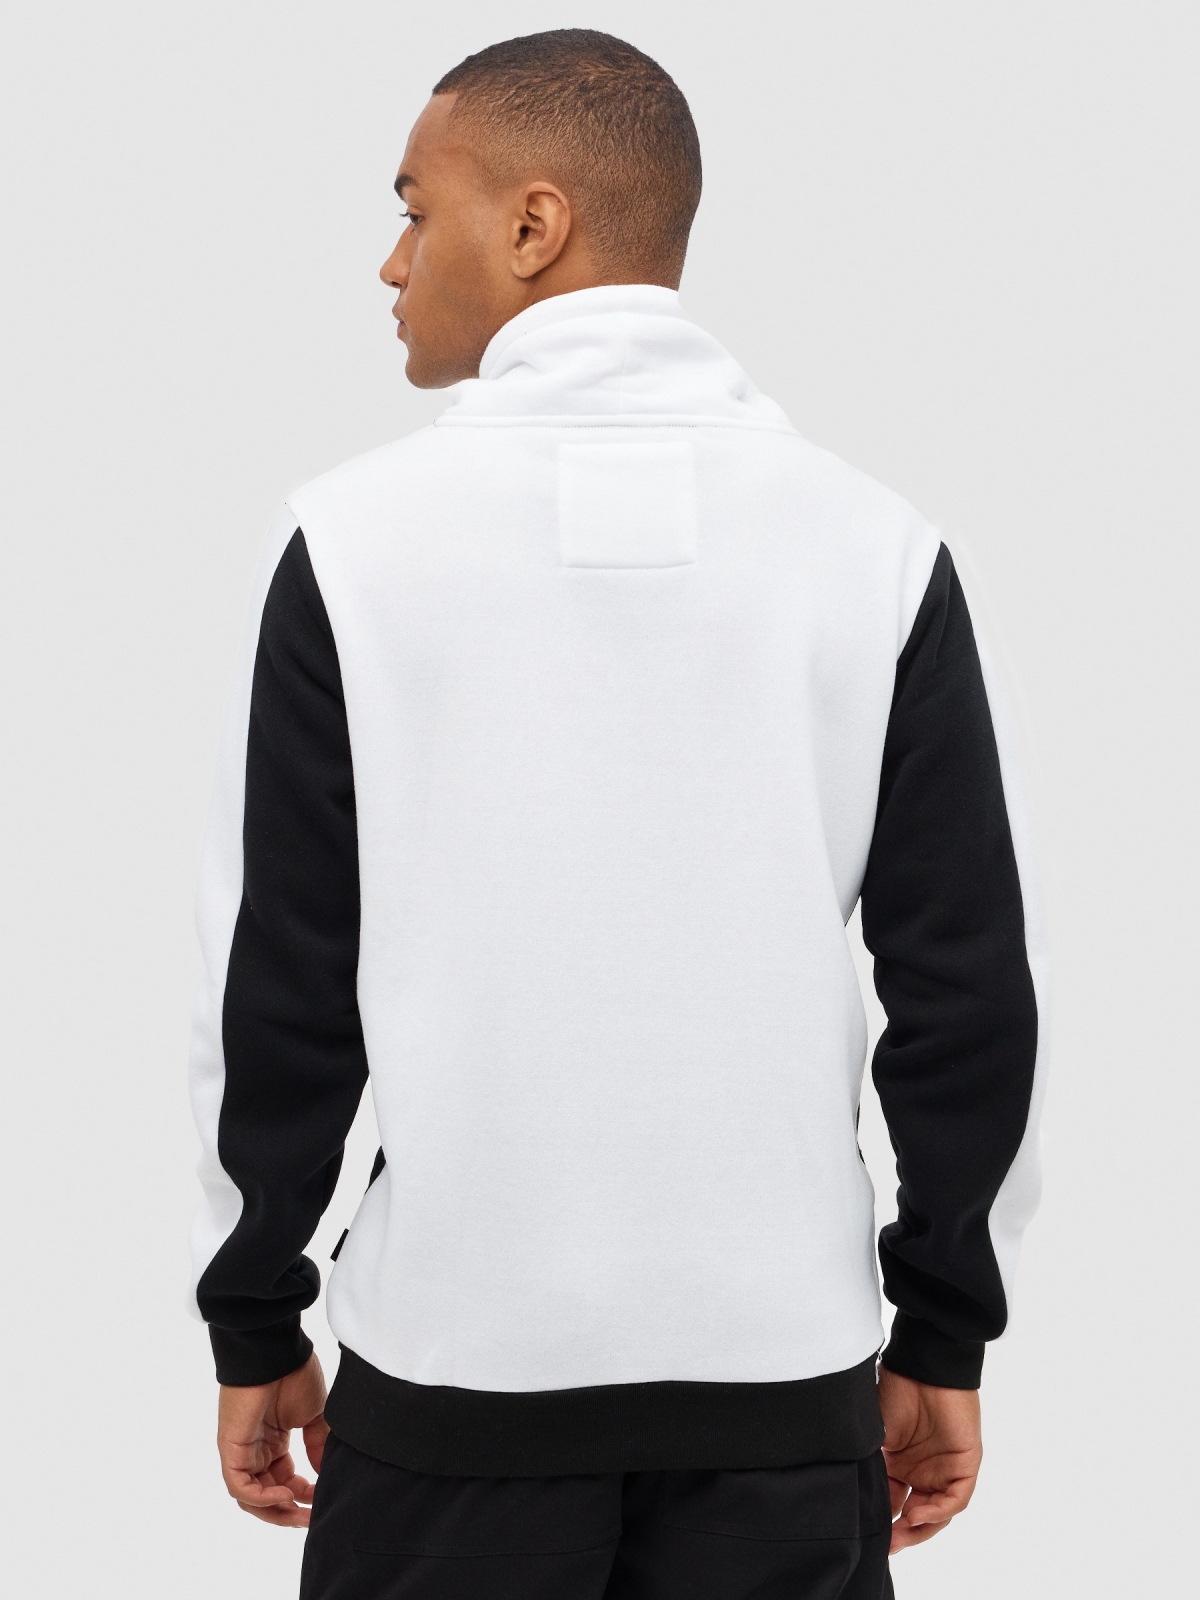 Sweatshirt de gola redonda sem capuz branco vista meia traseira